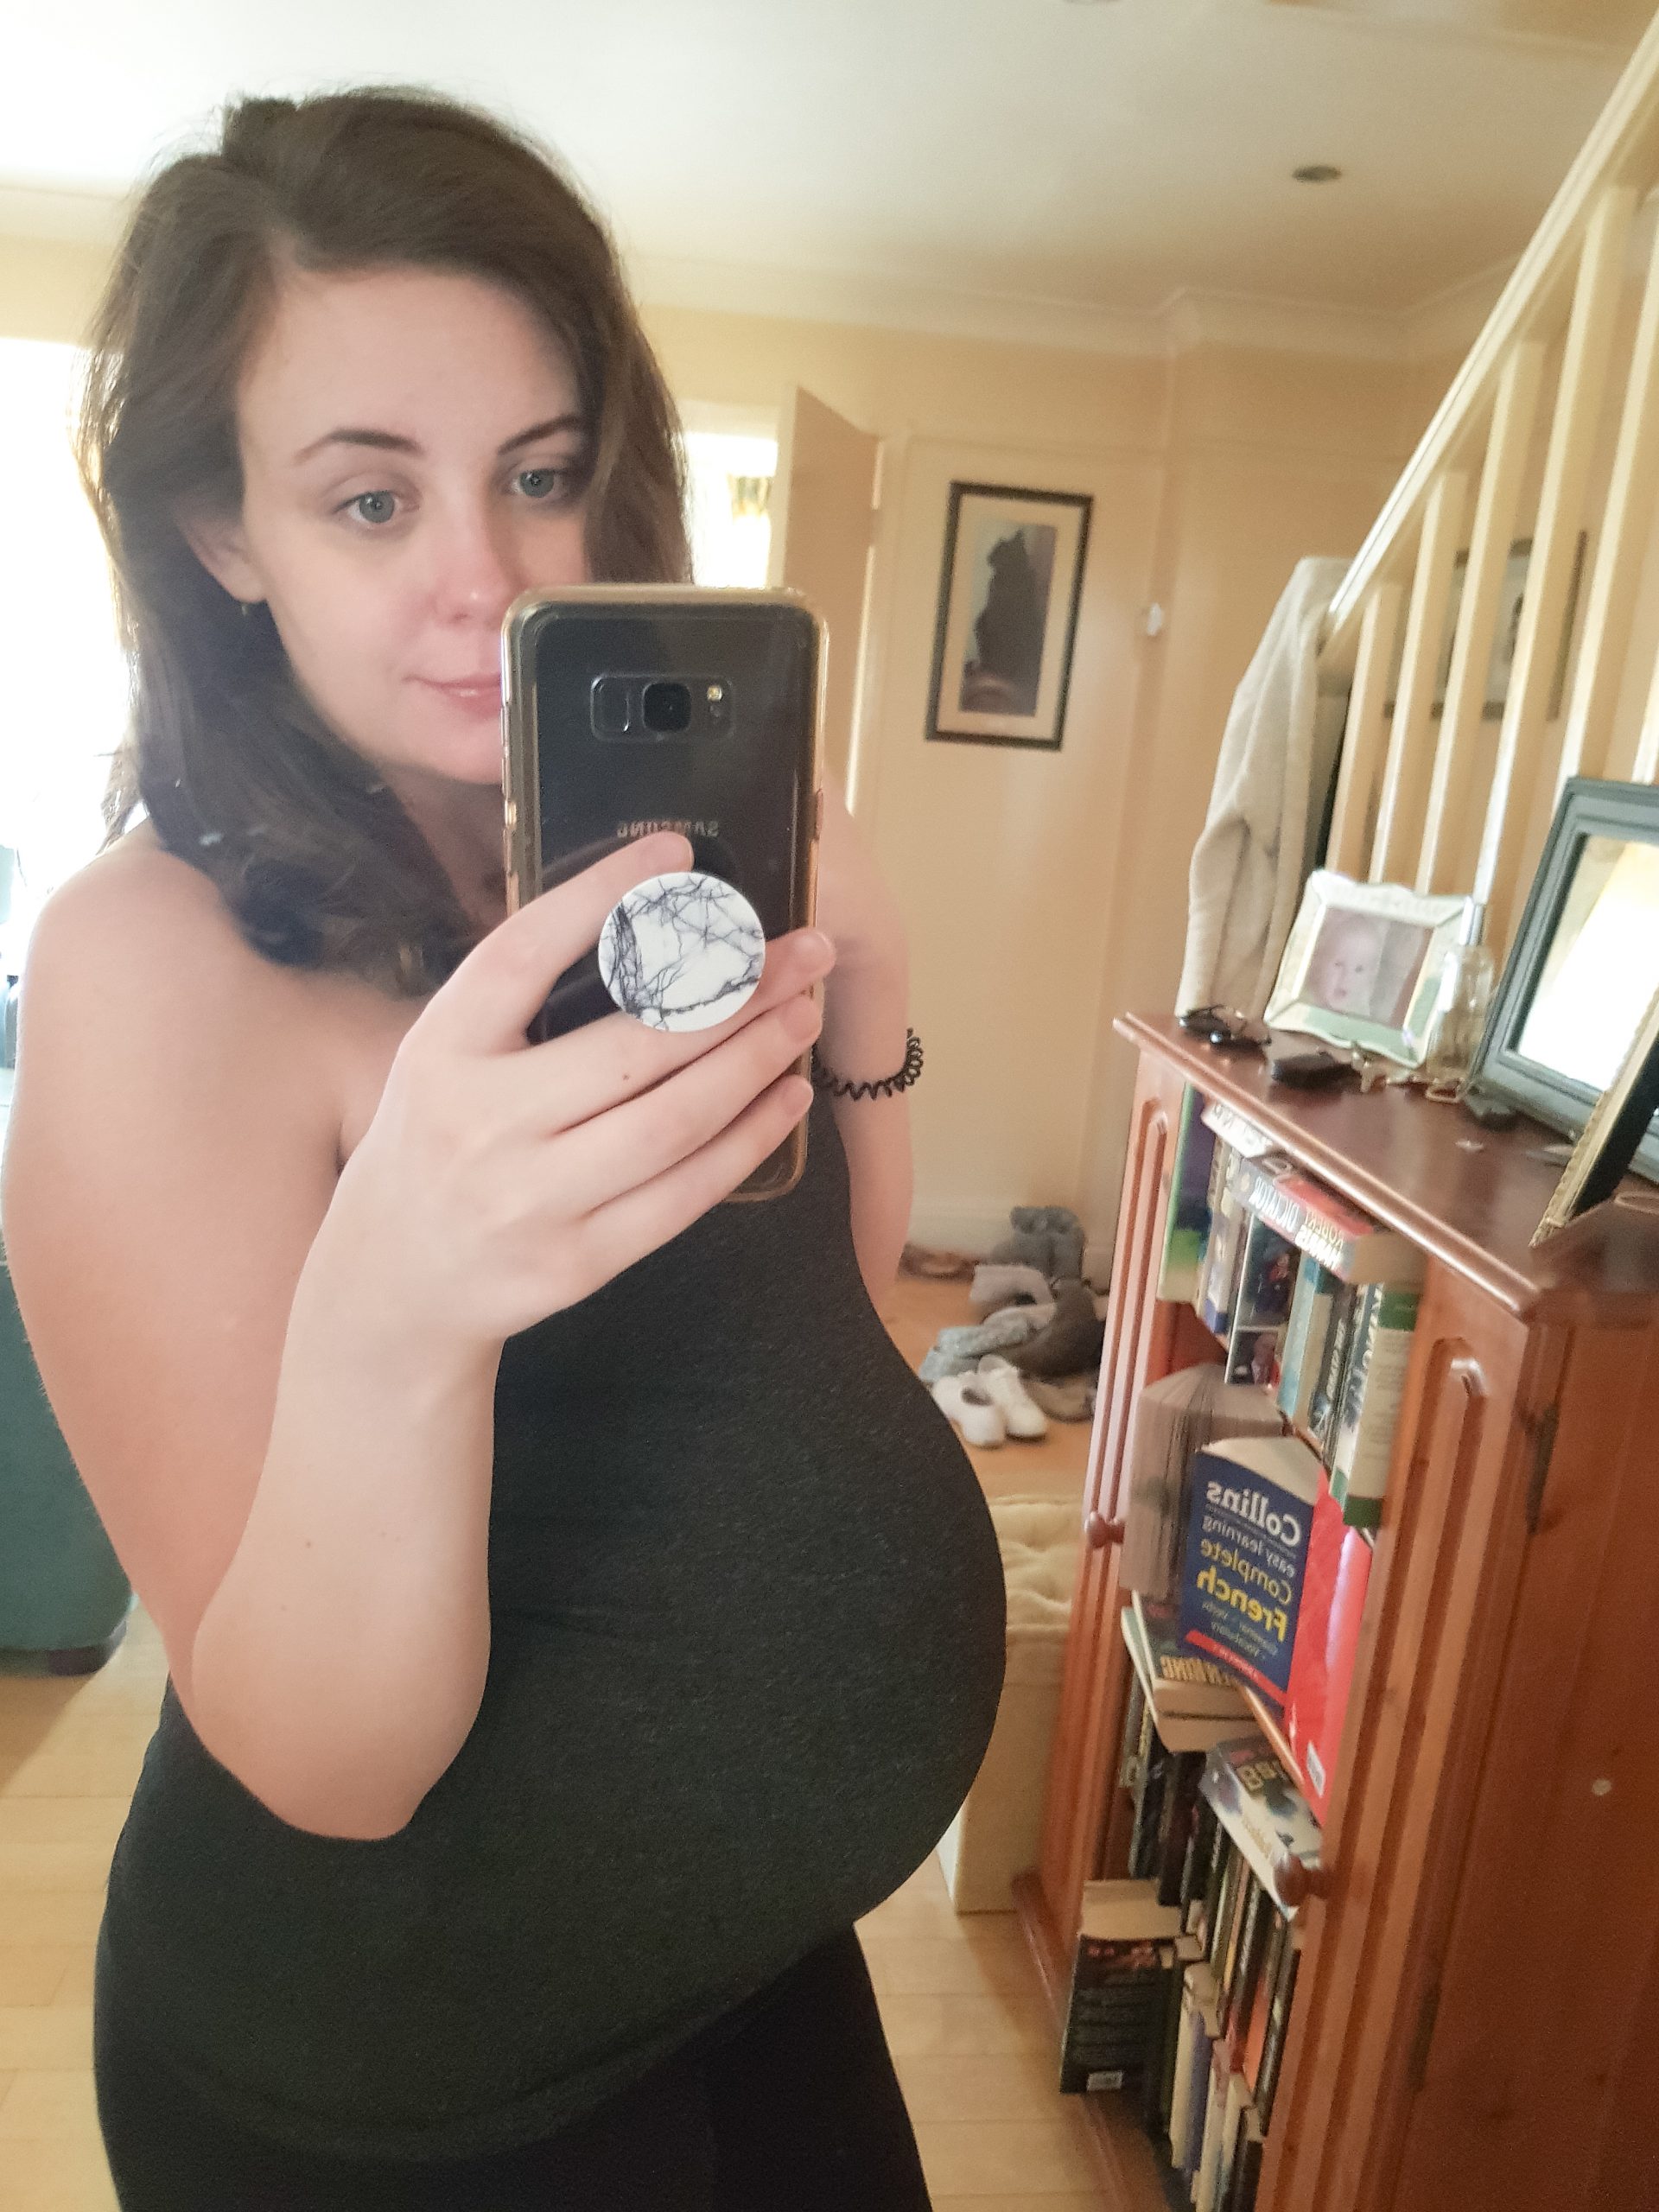 38 weeks pregnant baby bump